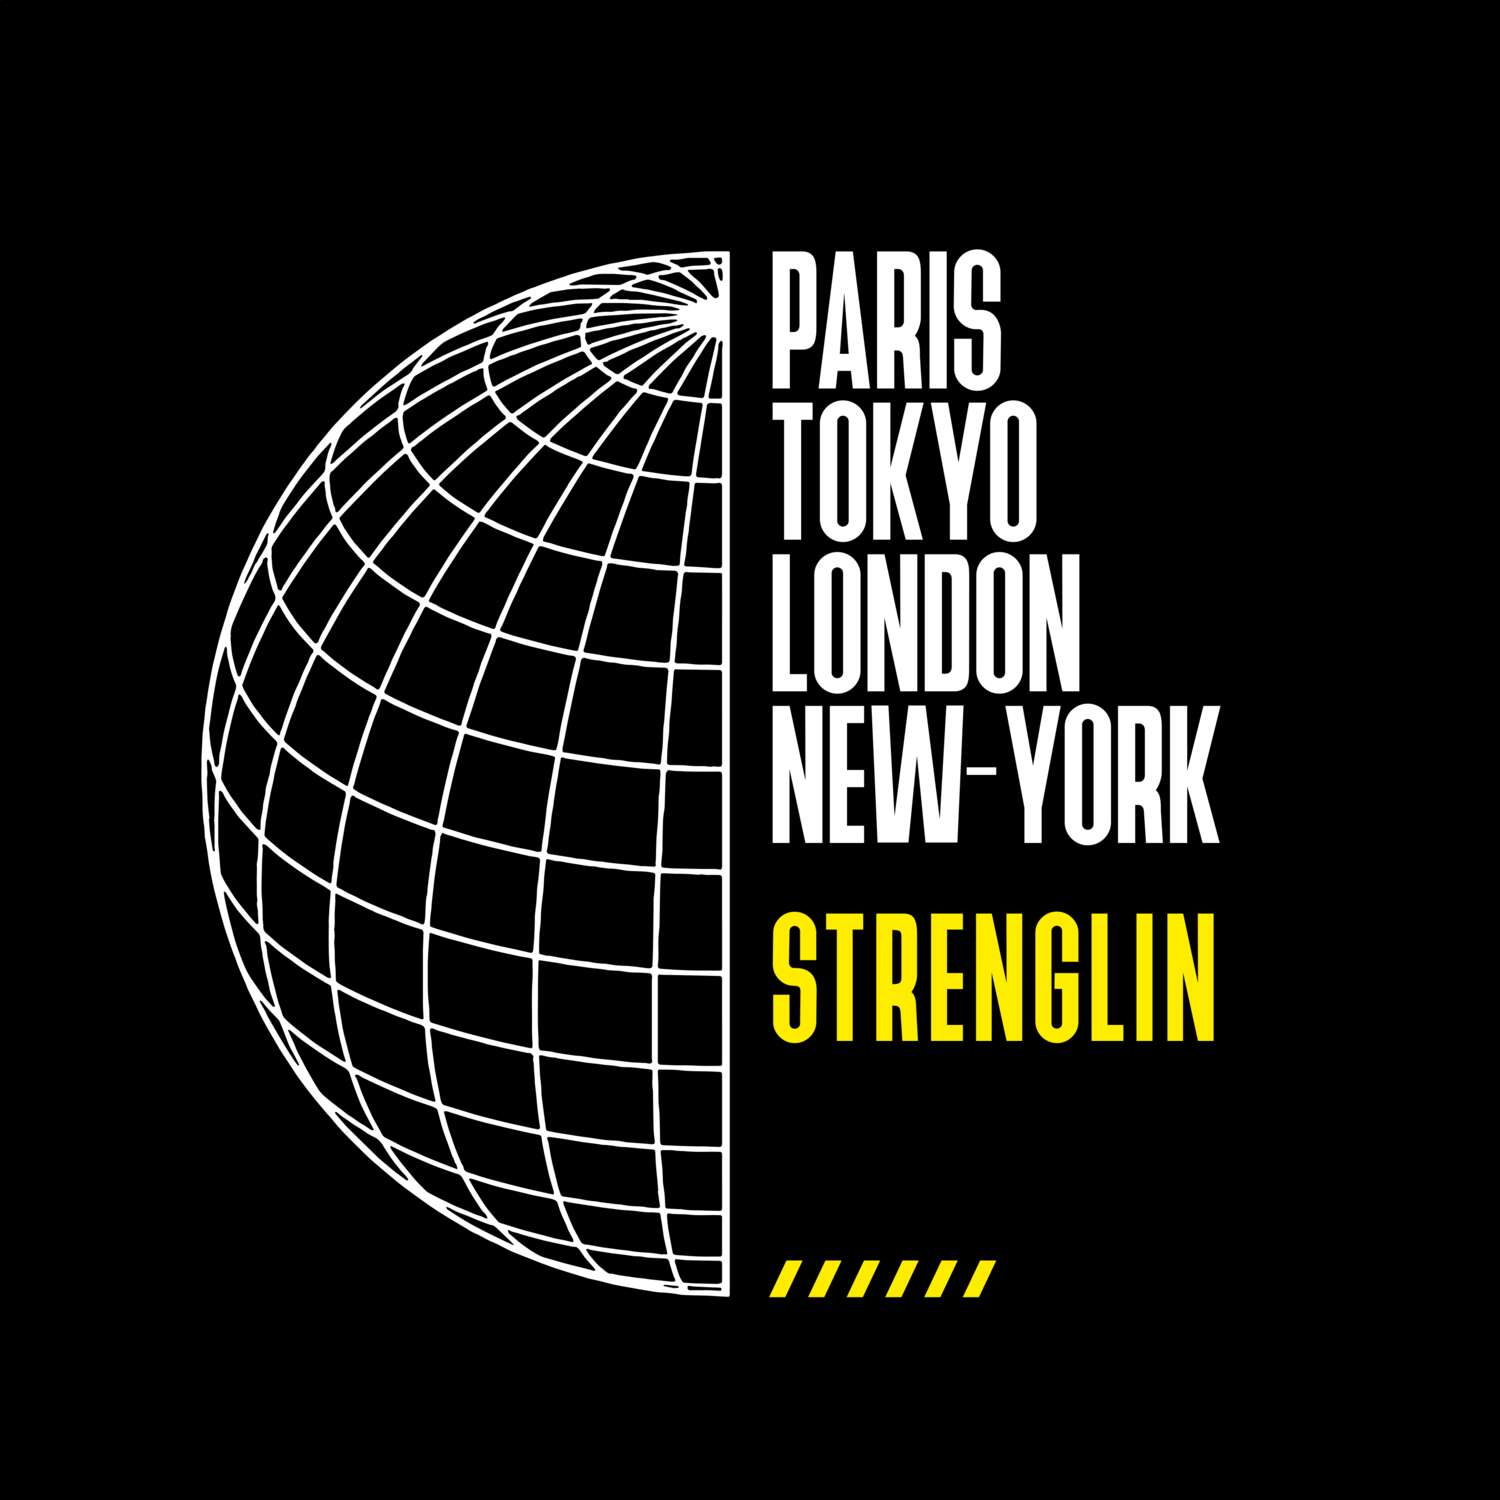 Strenglin T-Shirt »Paris Tokyo London«